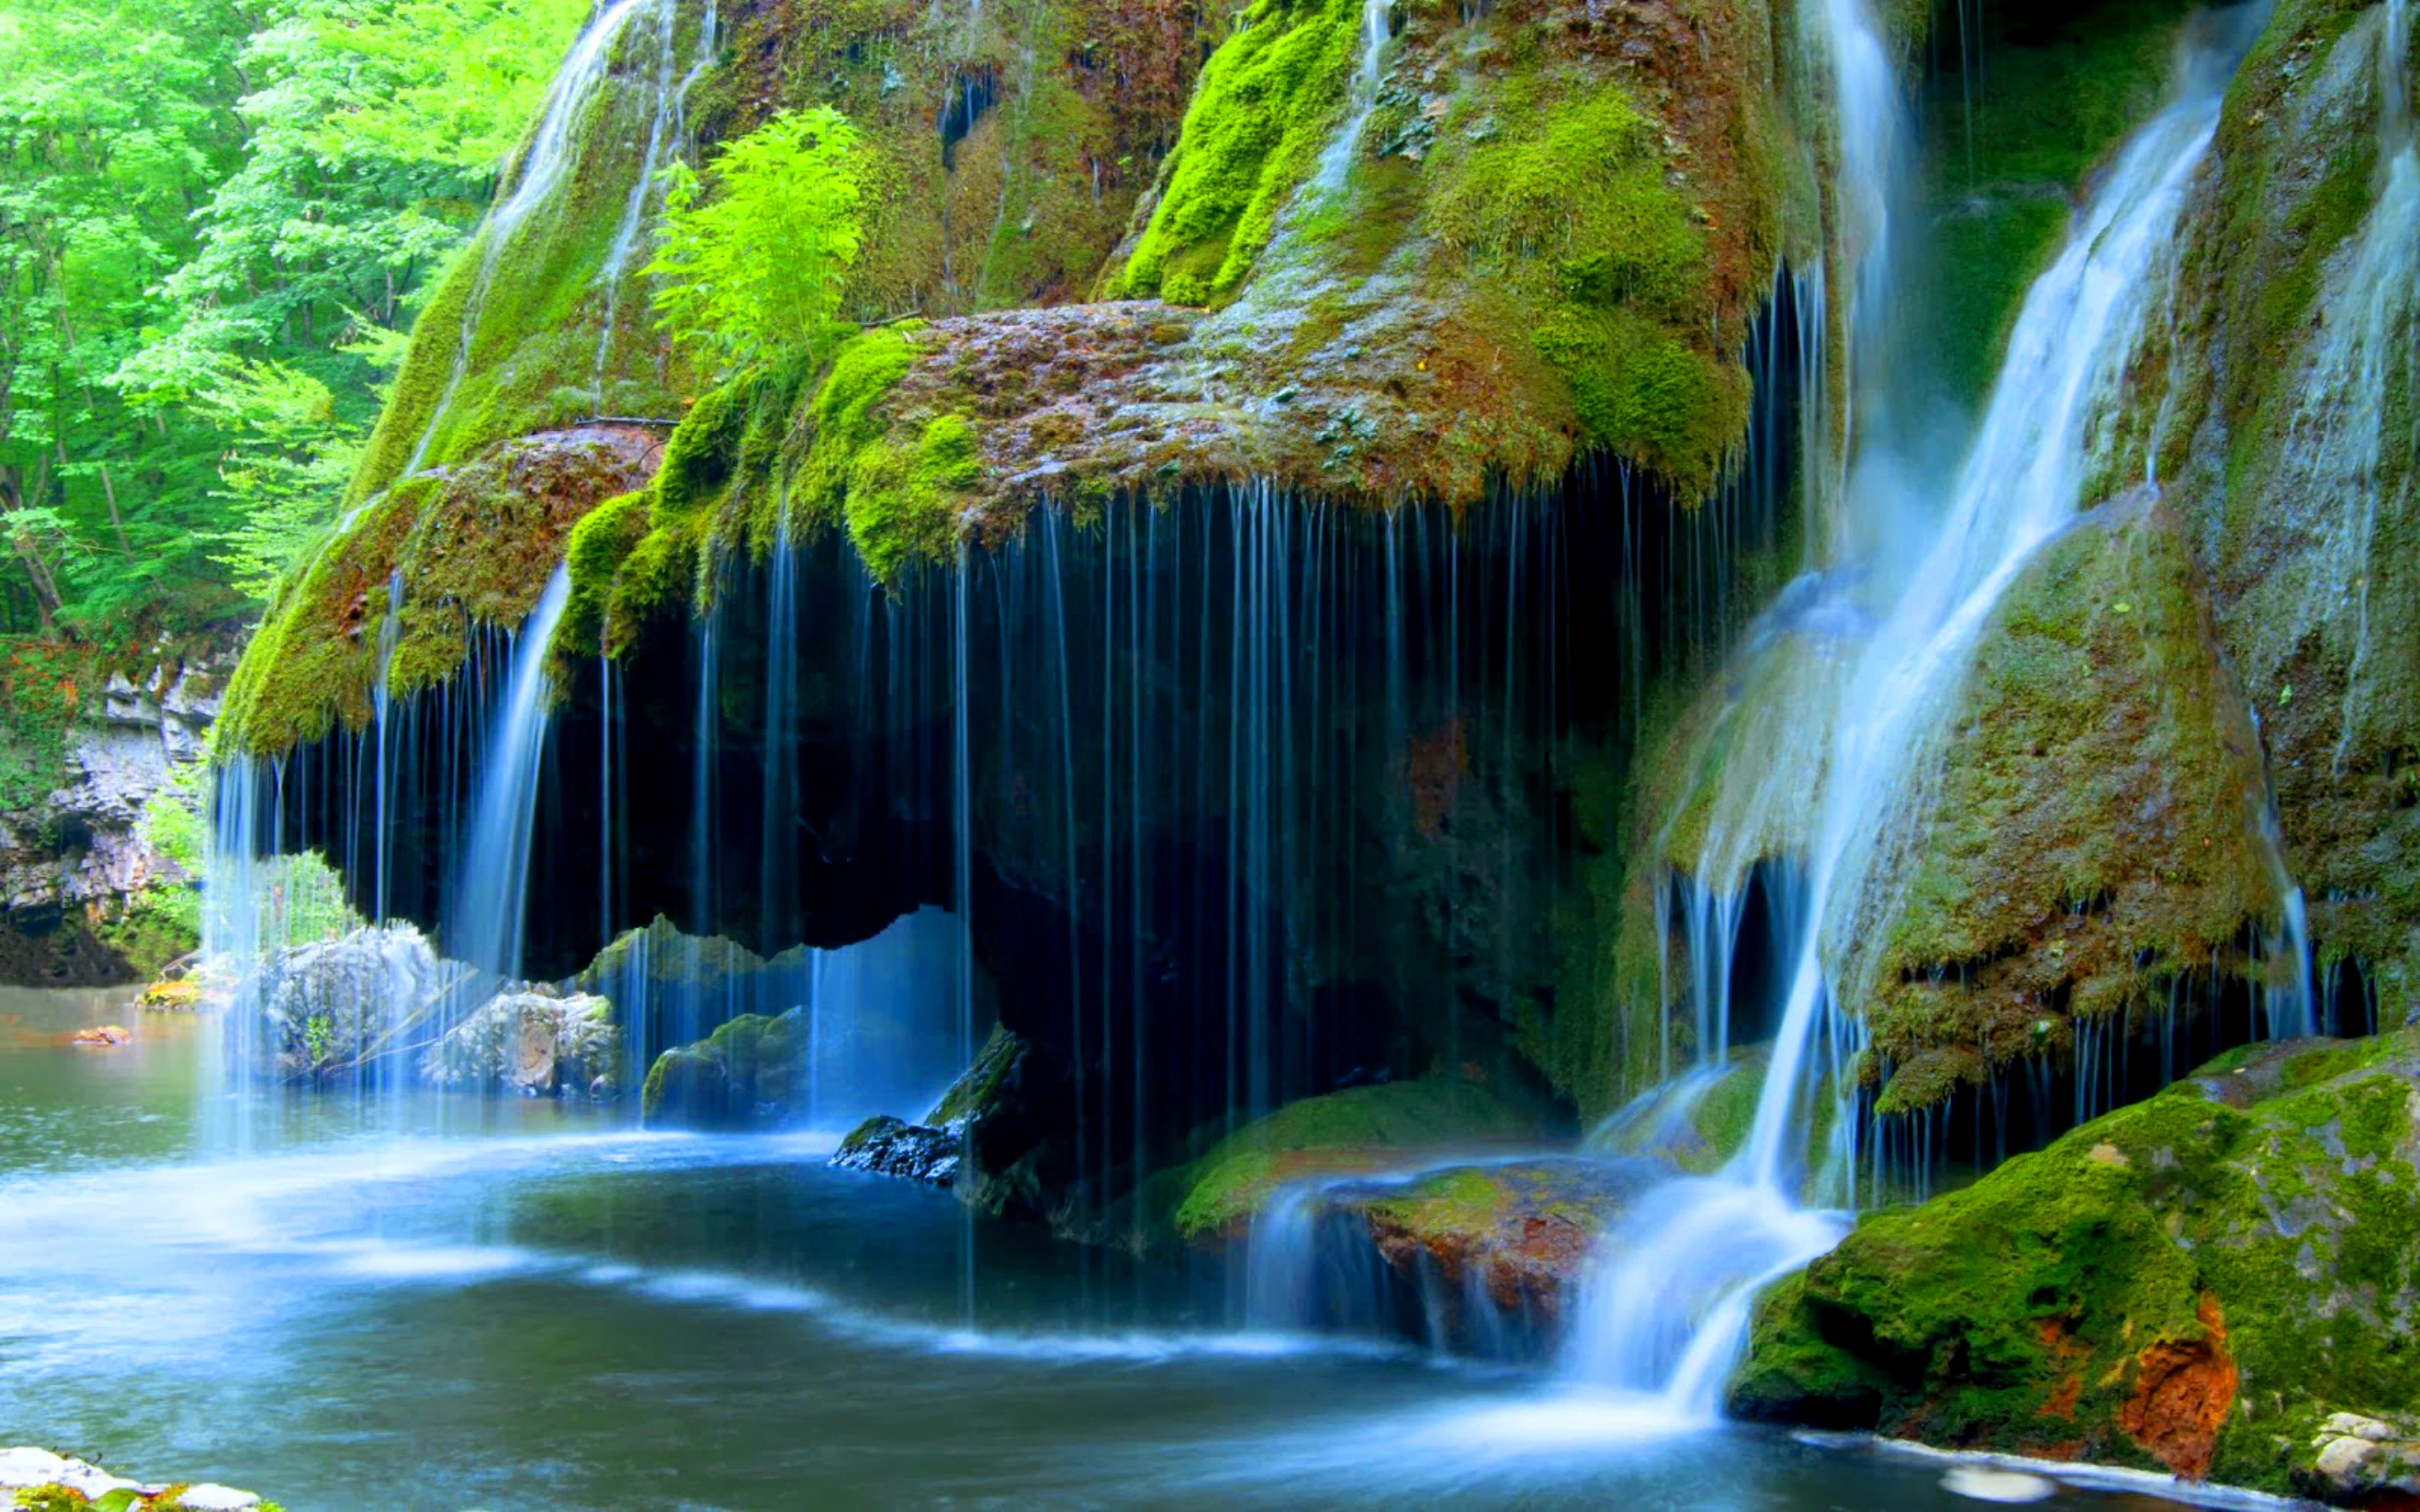 Bigar Cascade Falls Beautiful Waterfall In Caras Severin Romania Desktop  Wallpaper Hd For Mobile Phones And Laptops 2560x1600 : 